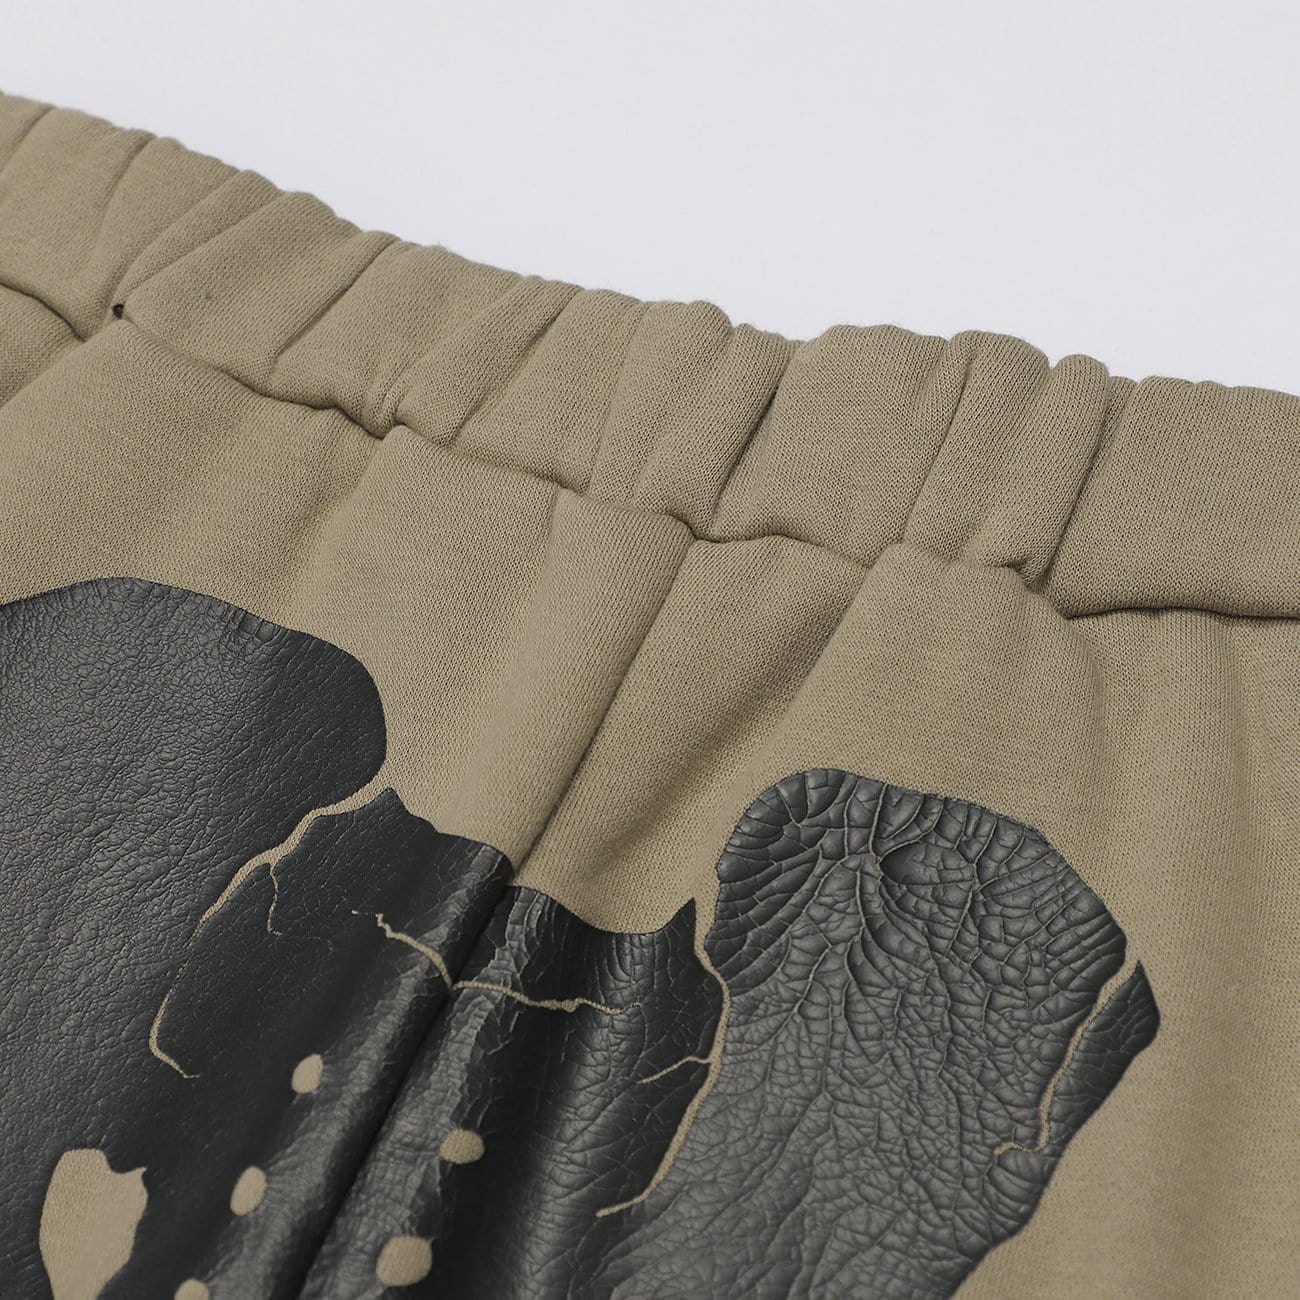 Human Skeleton Print Pants Streetwear Brand Techwear Combat Tactical YUGEN THEORY